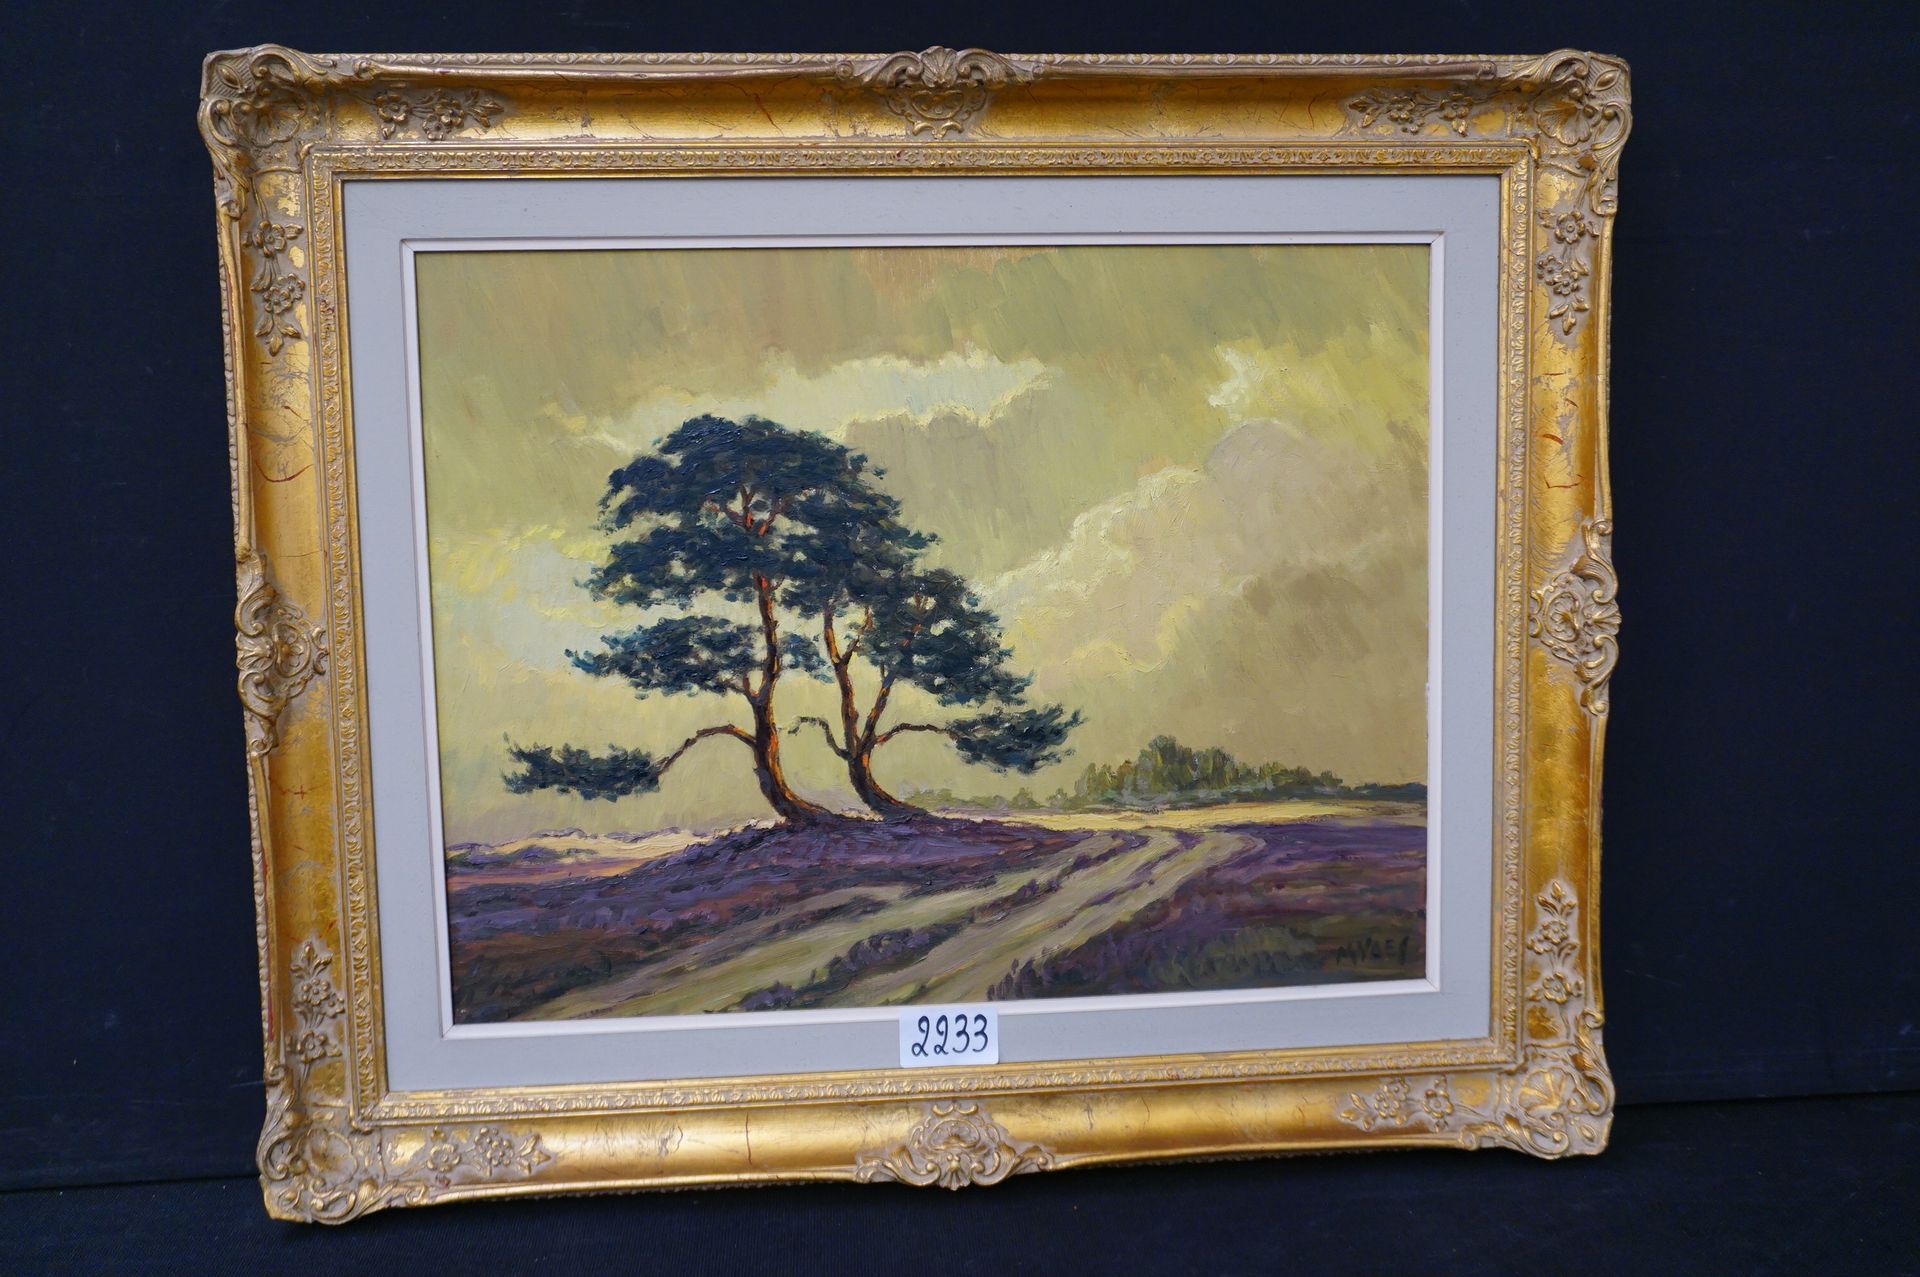 M. VAES "Heath Landscape" - Oil on canvas - Signed - 50 x 65 cm